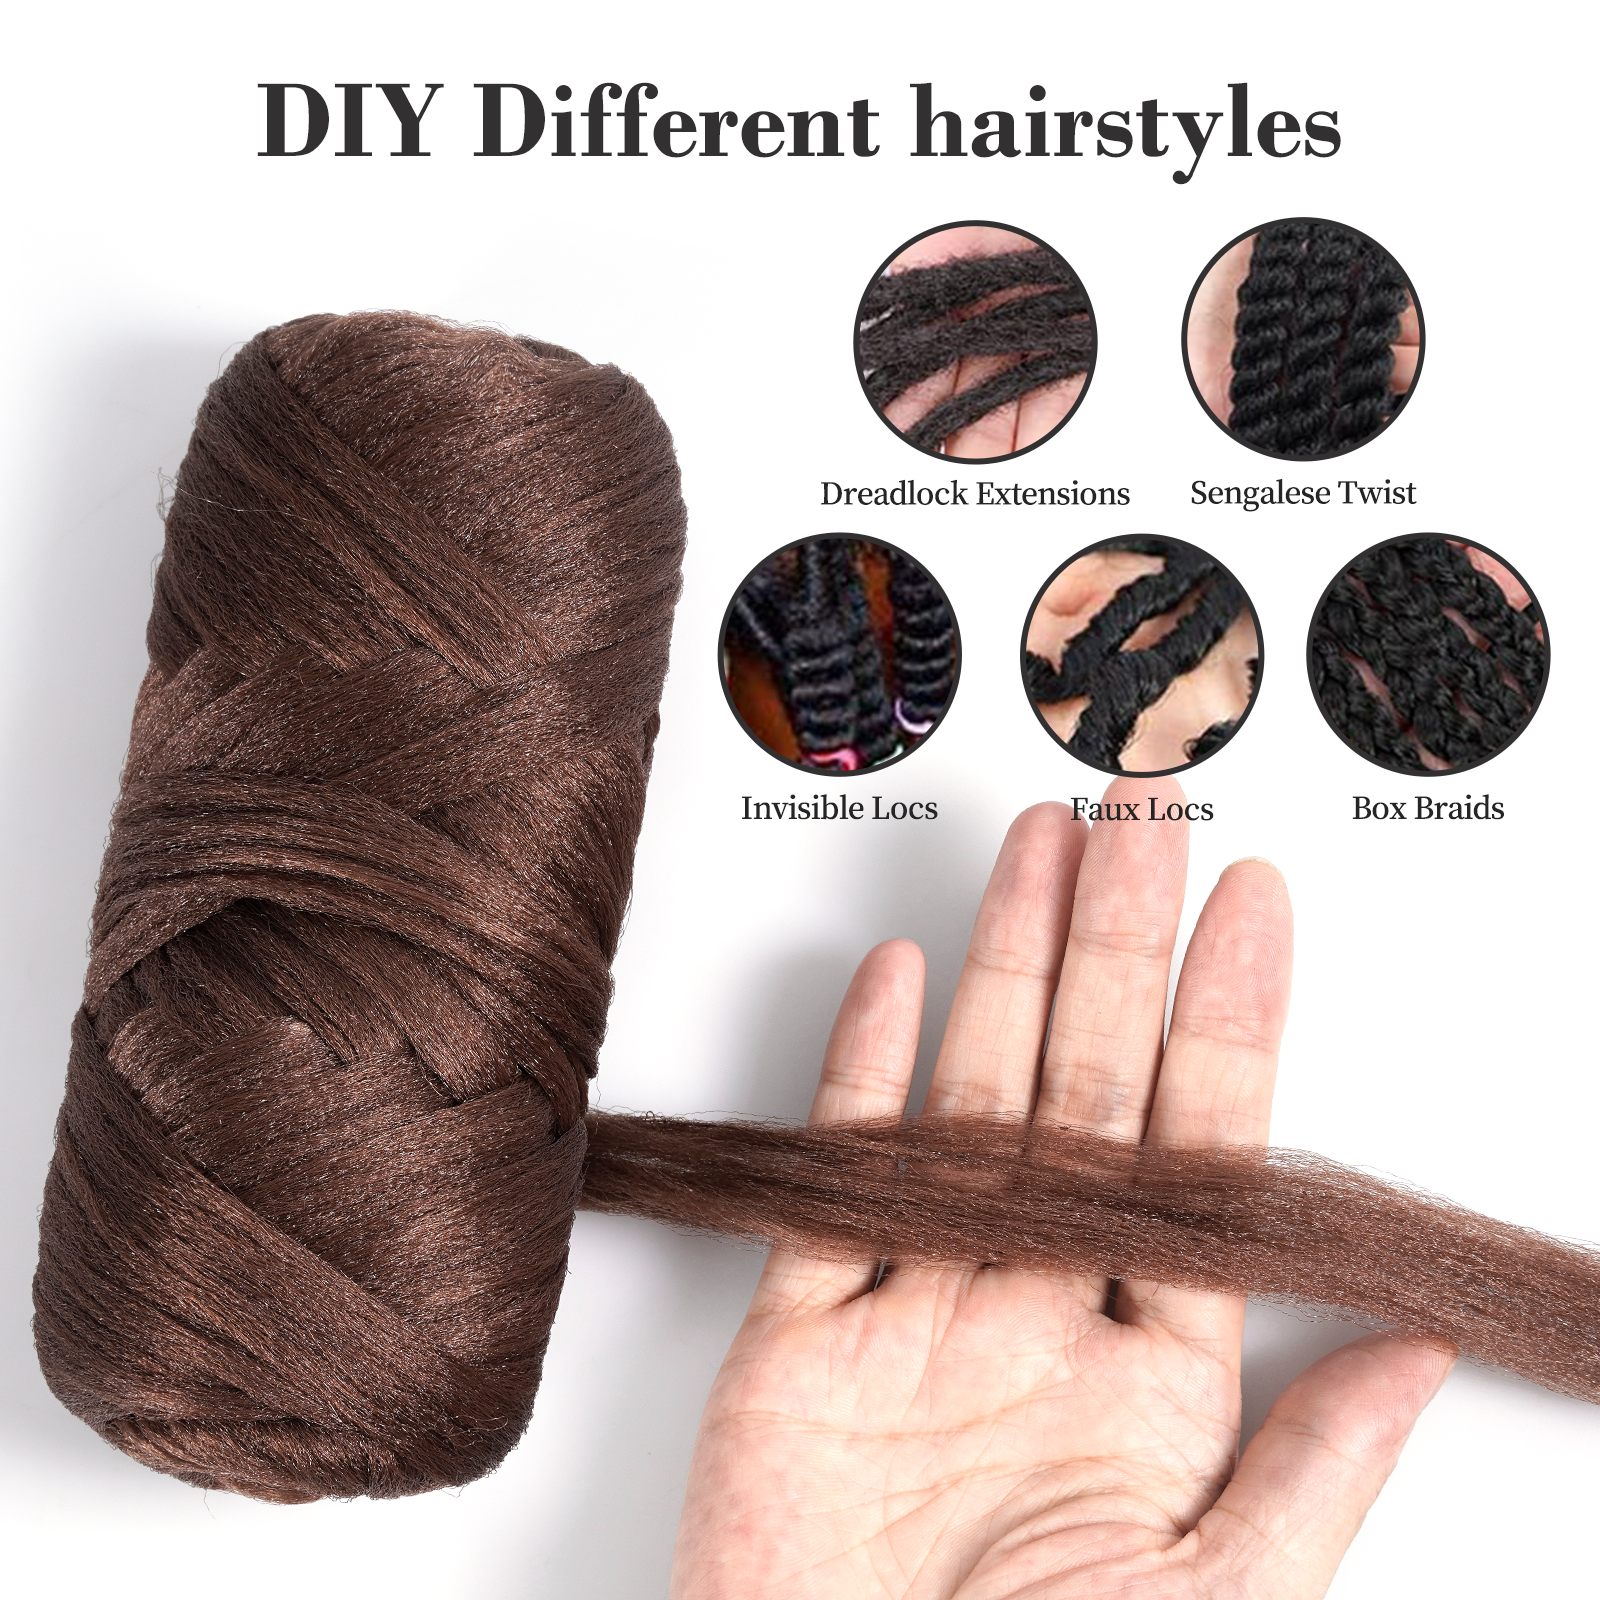 Toyotress 4 Roll Natural Black Brazilian Wool Hair Acrylic Yarn for African Crochet Hair Jumbo Braids Senegalese Twisting Knitting Hair Braids Faux locs Spiral Corkscrews Braids Twist